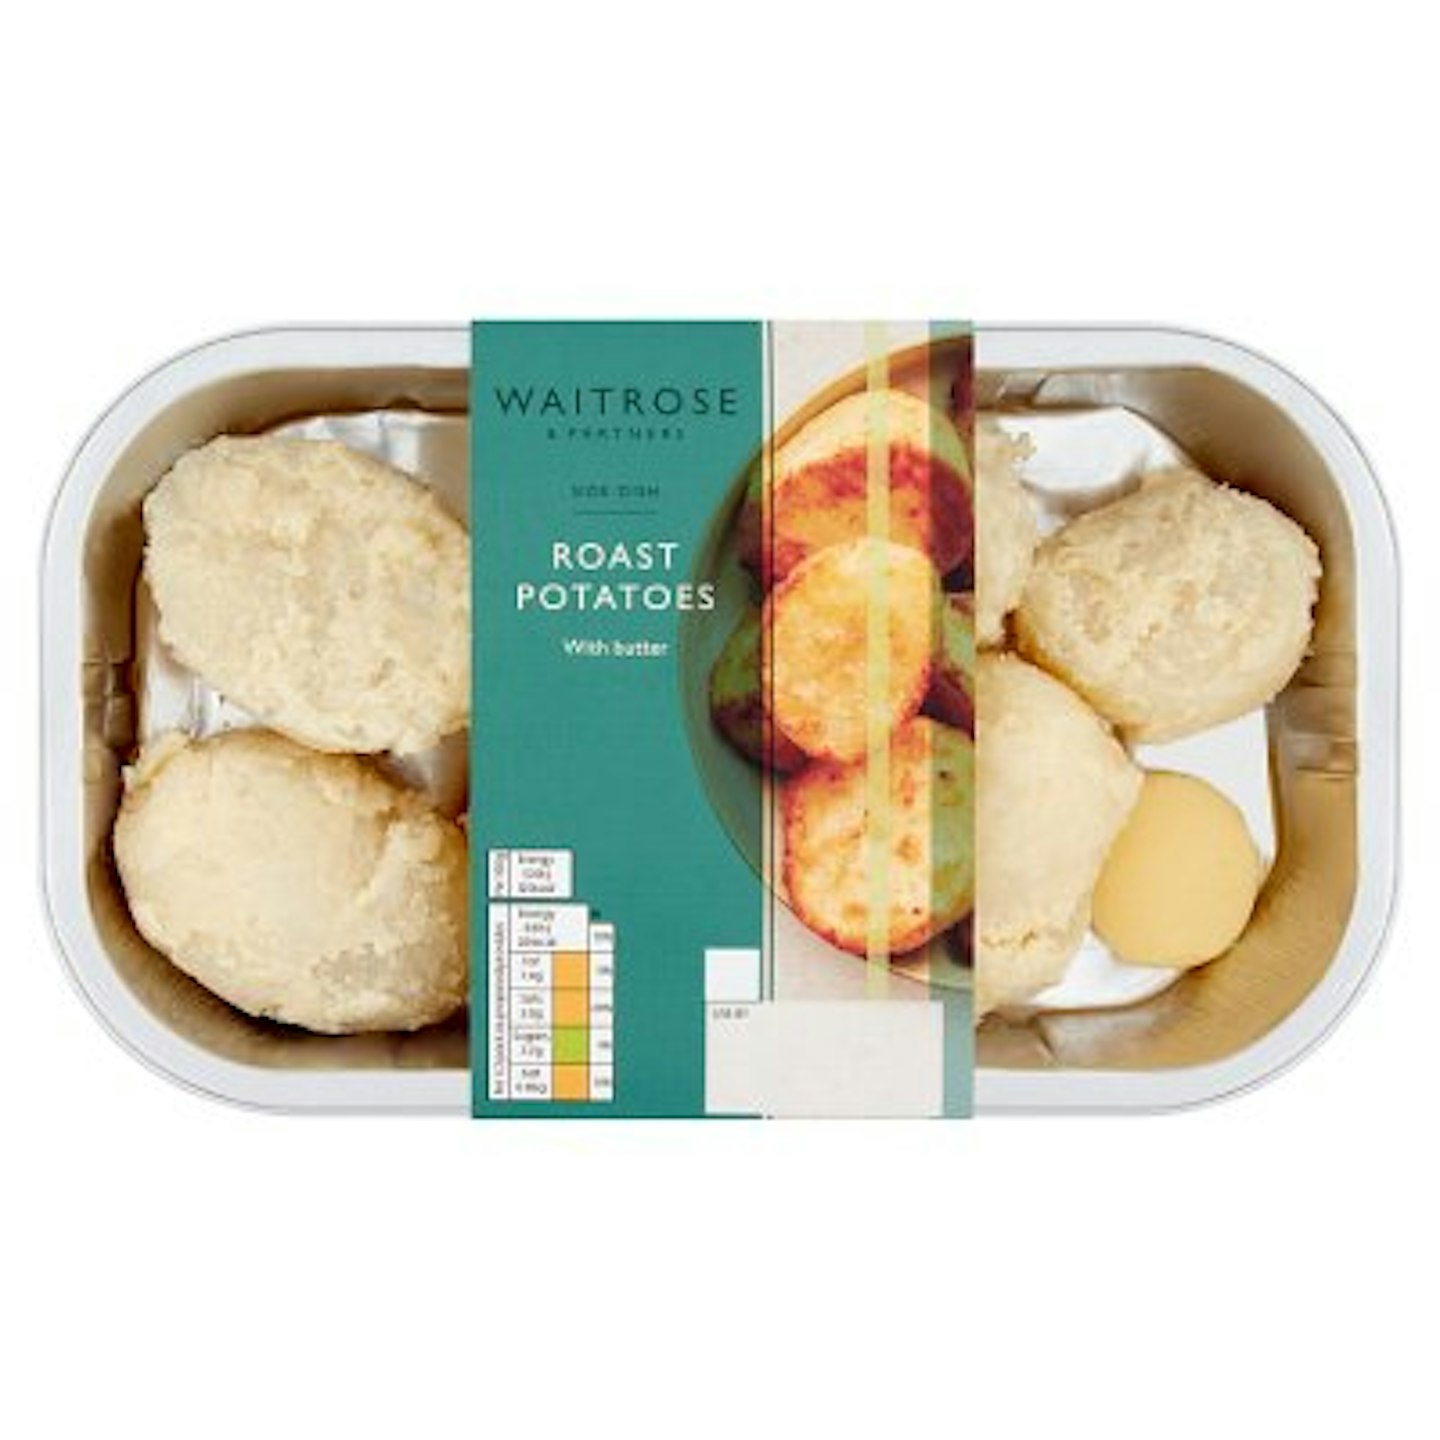 Waitrose Roast Potatoes - Christmas dinner essentials